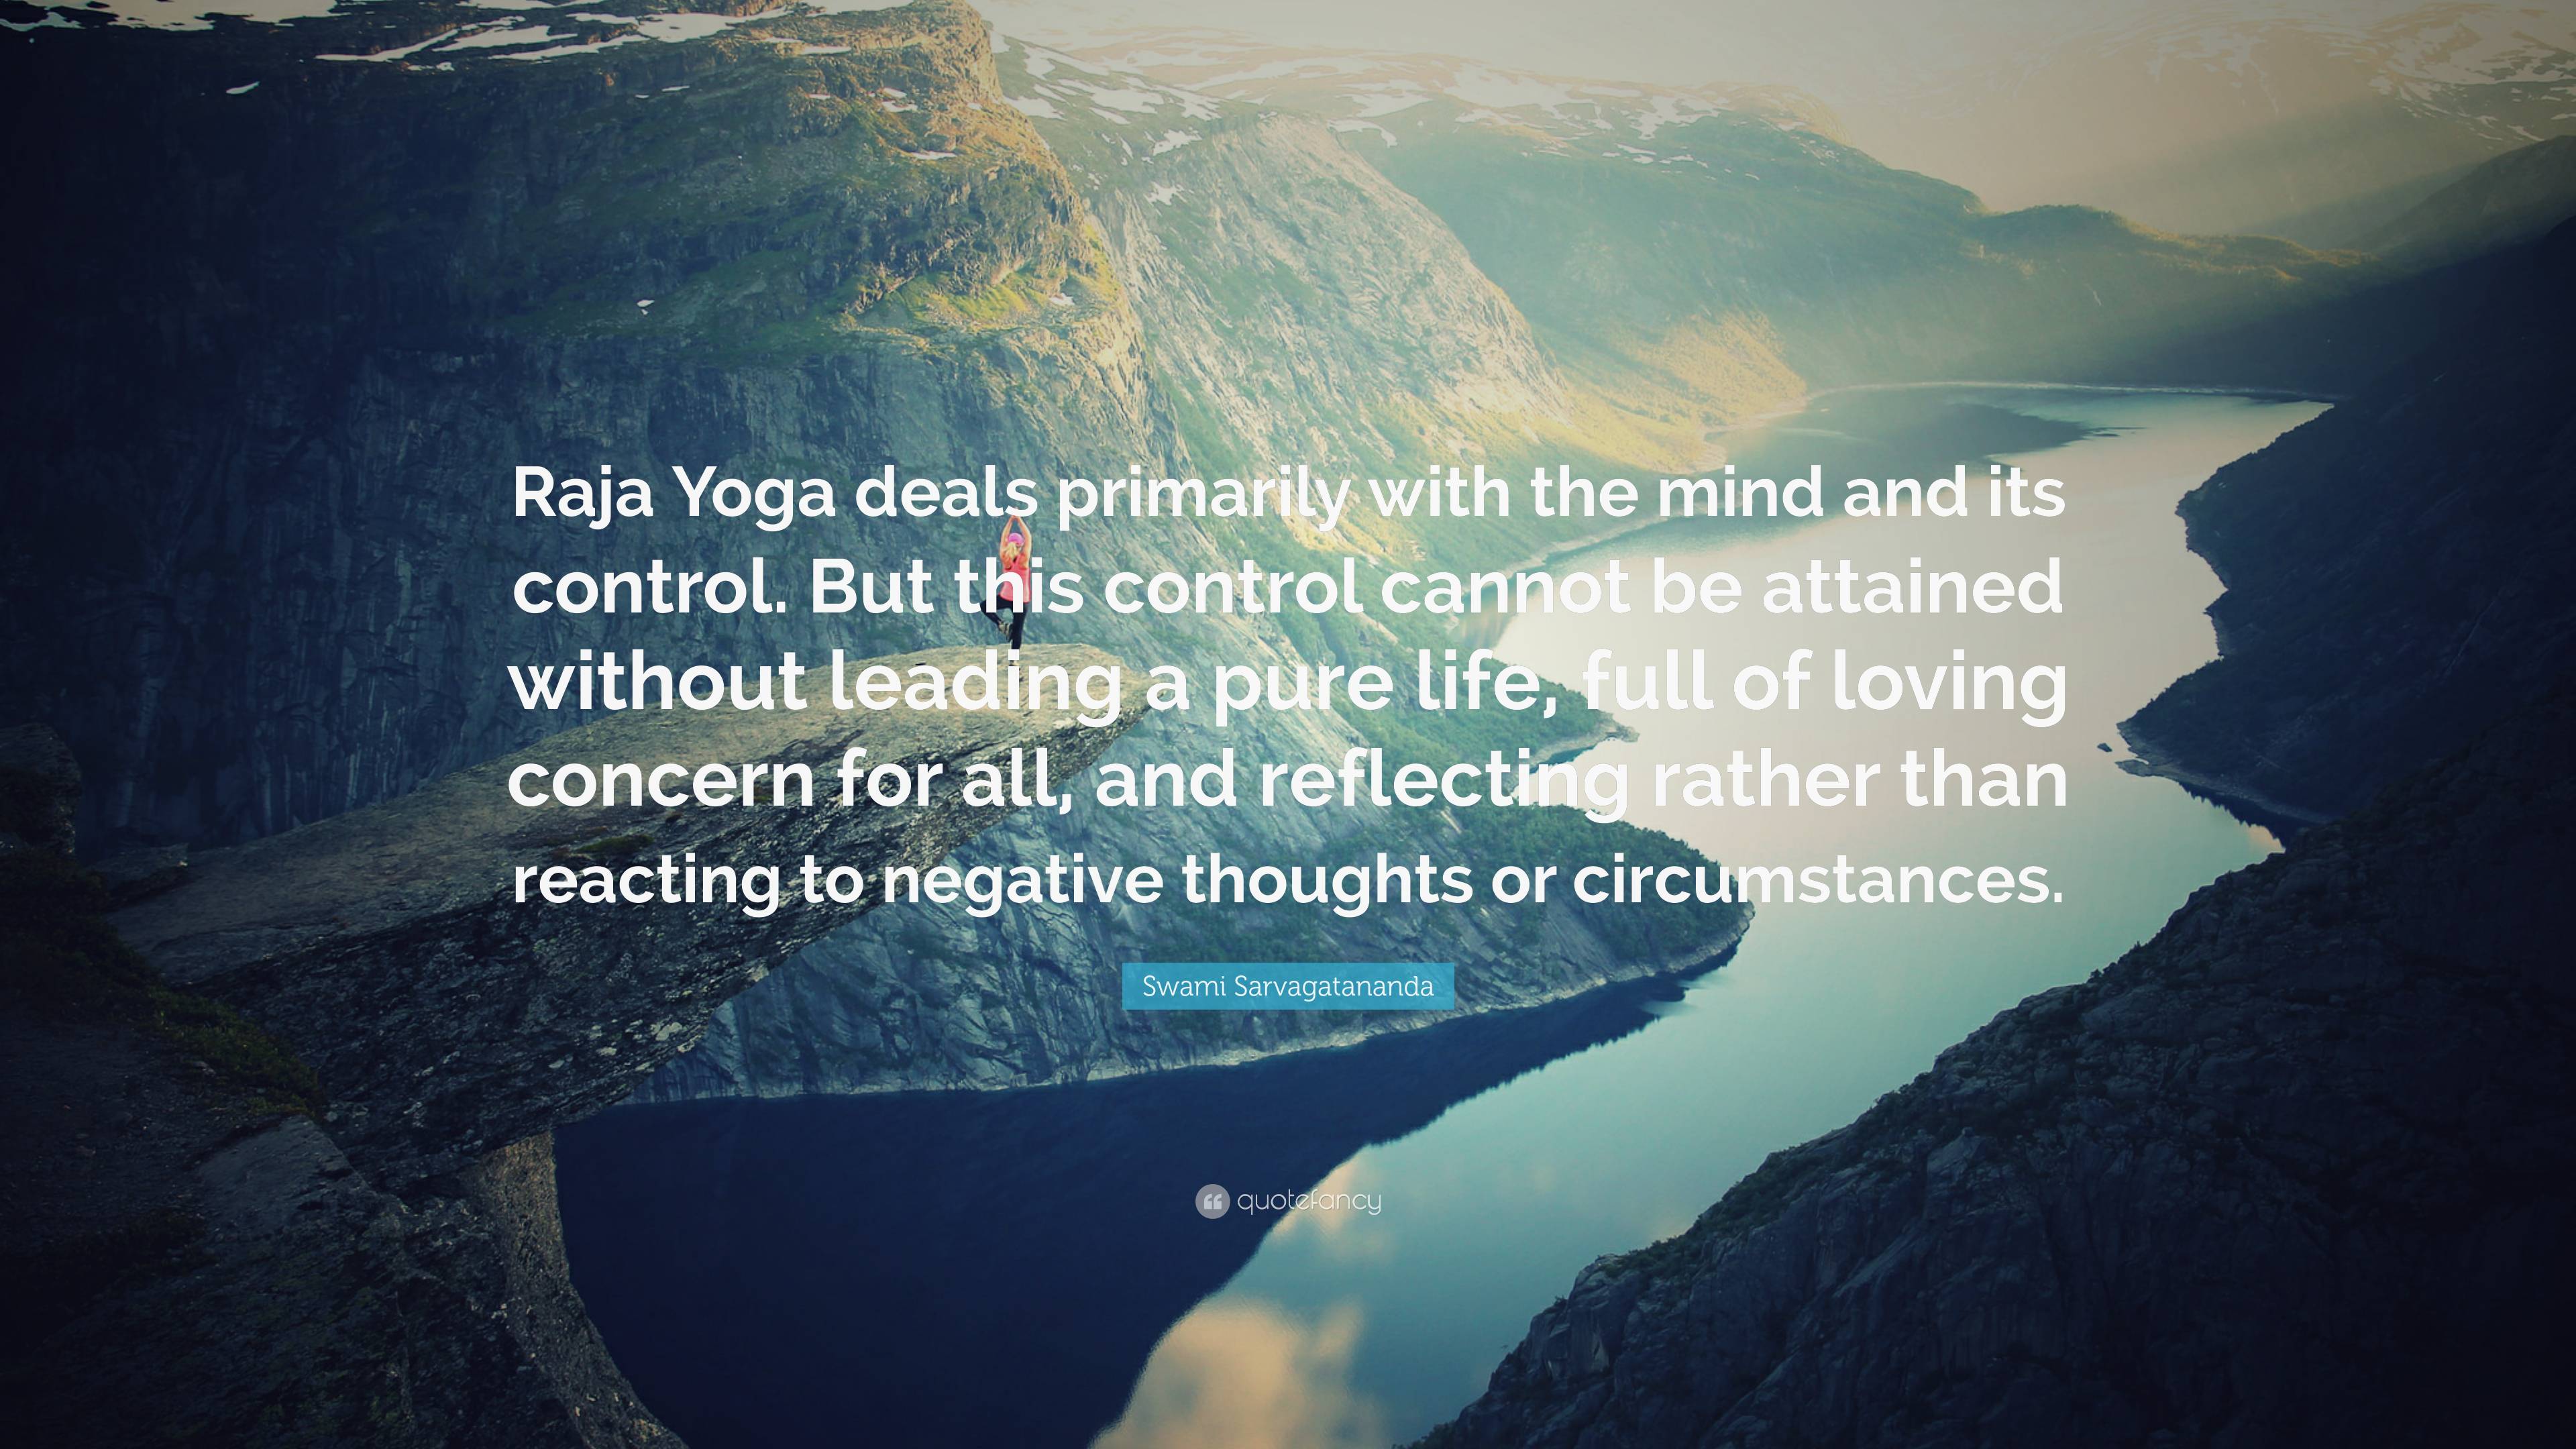 Swami Sarvagatananda Quote: “Raja Yoga deals primarily with the